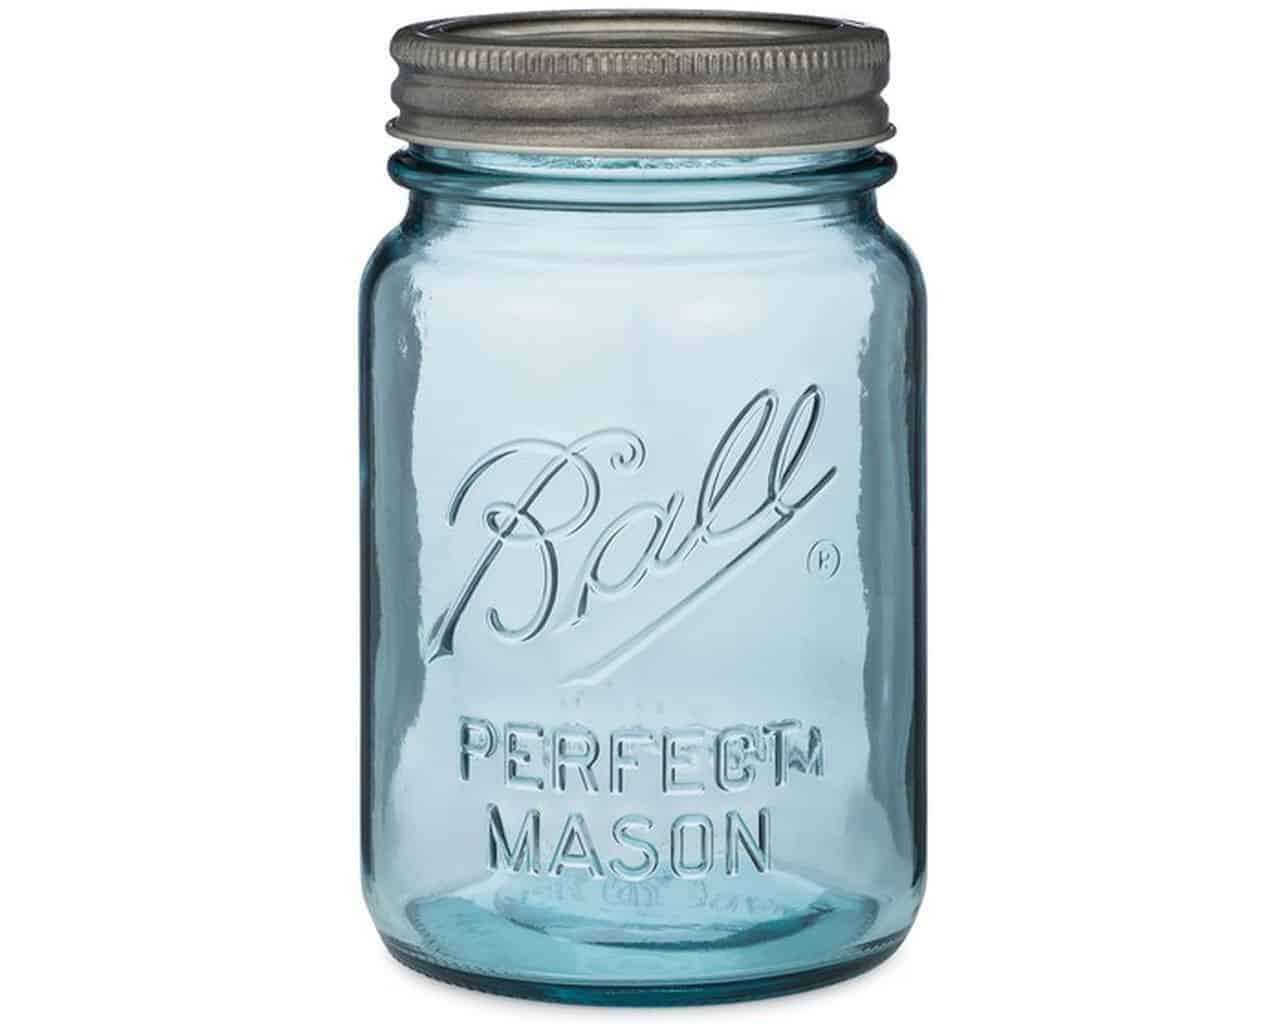 Mason jars for storing weed